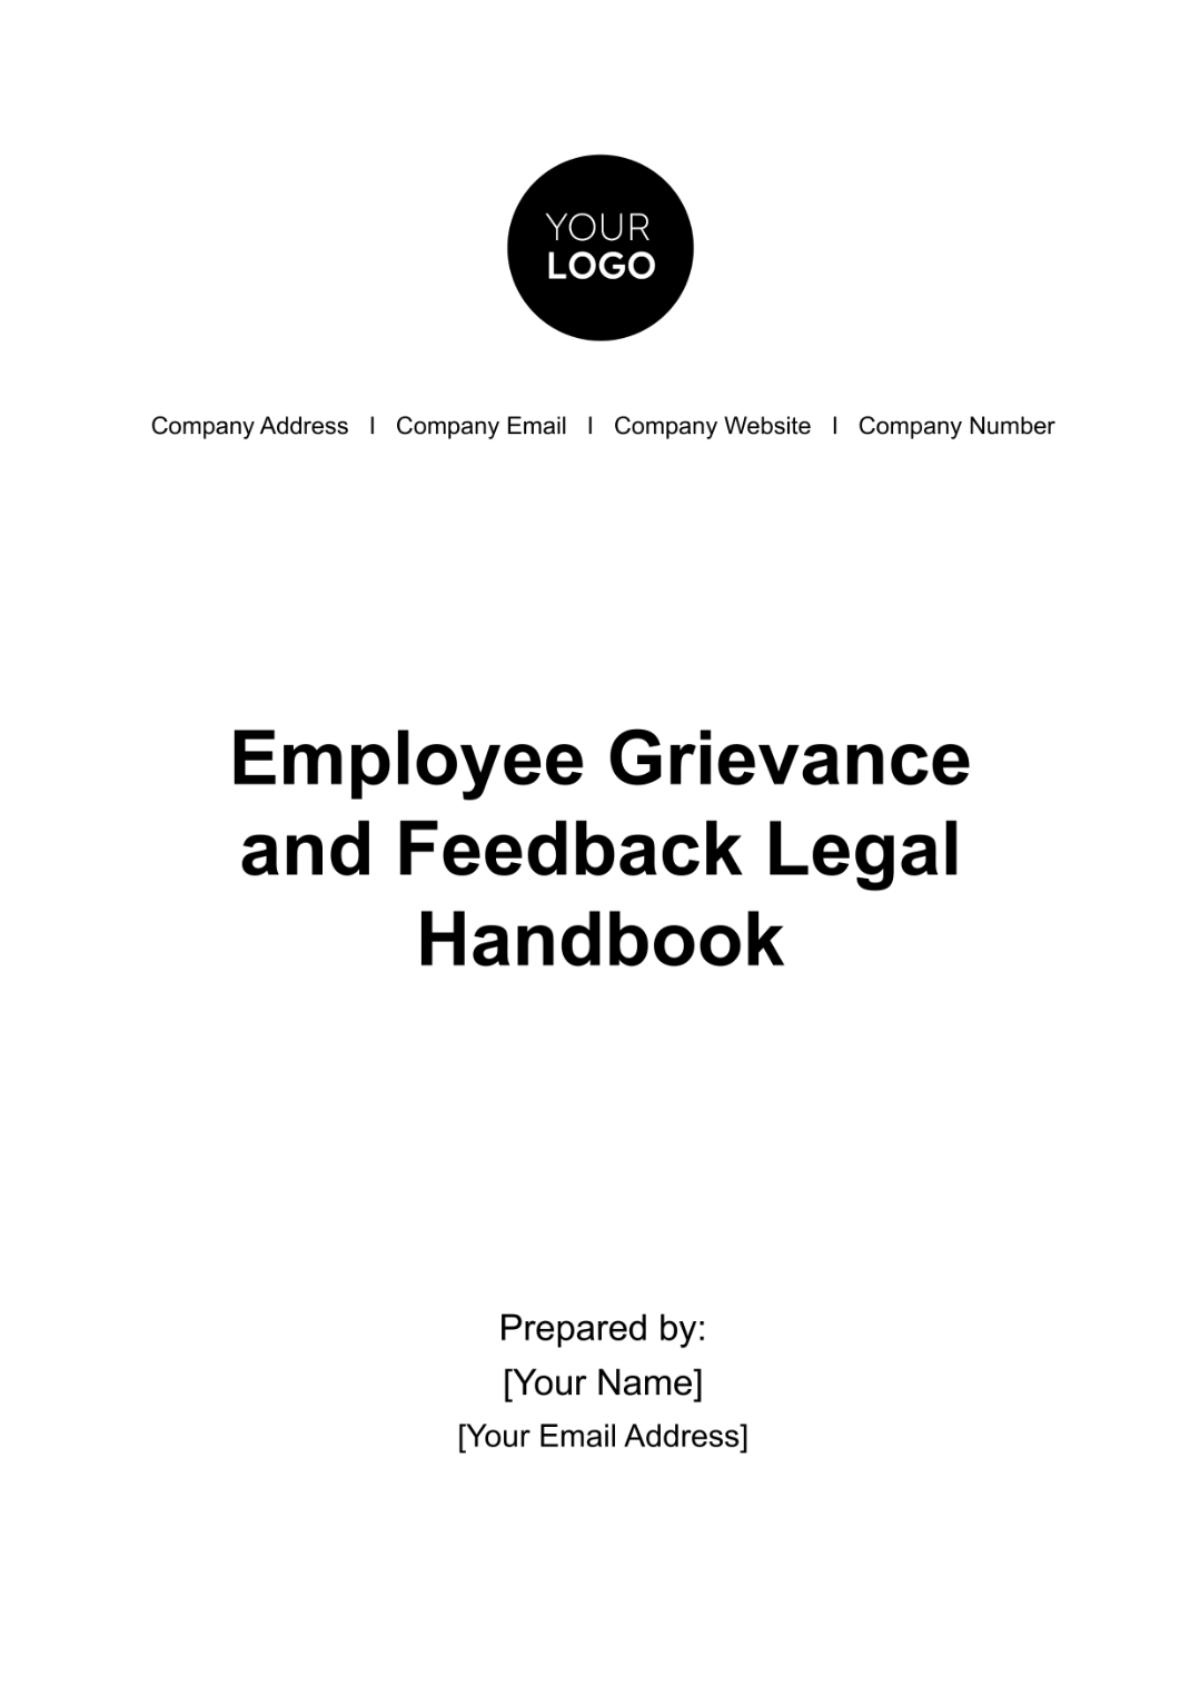 Employee Grievance and Feedback Legal Handbook HR Template